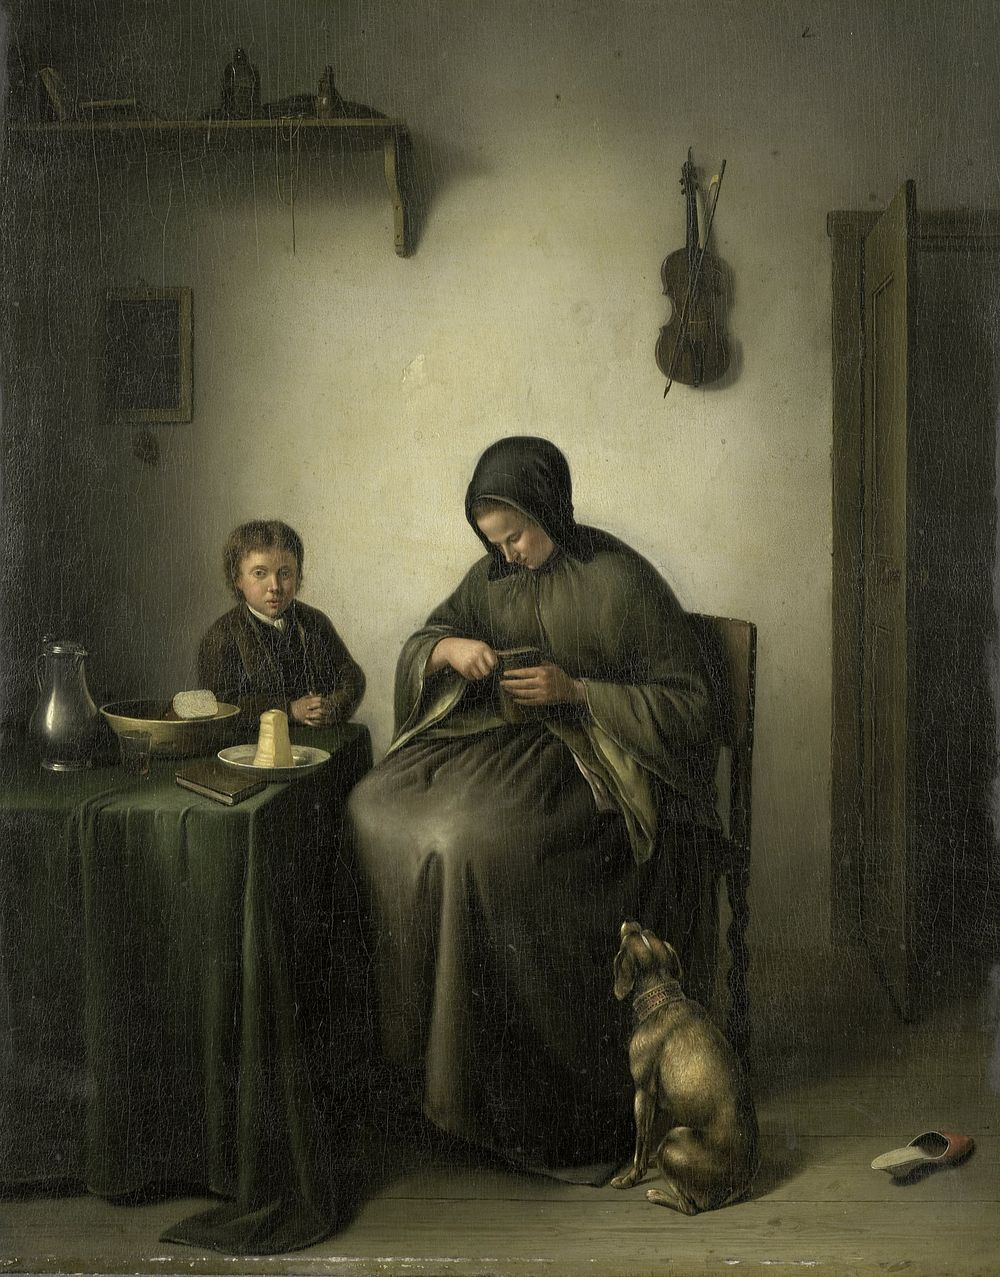 A Woman Slicing Bread (c. 1800 - c. 1823) by Johannes Christiaan Janson